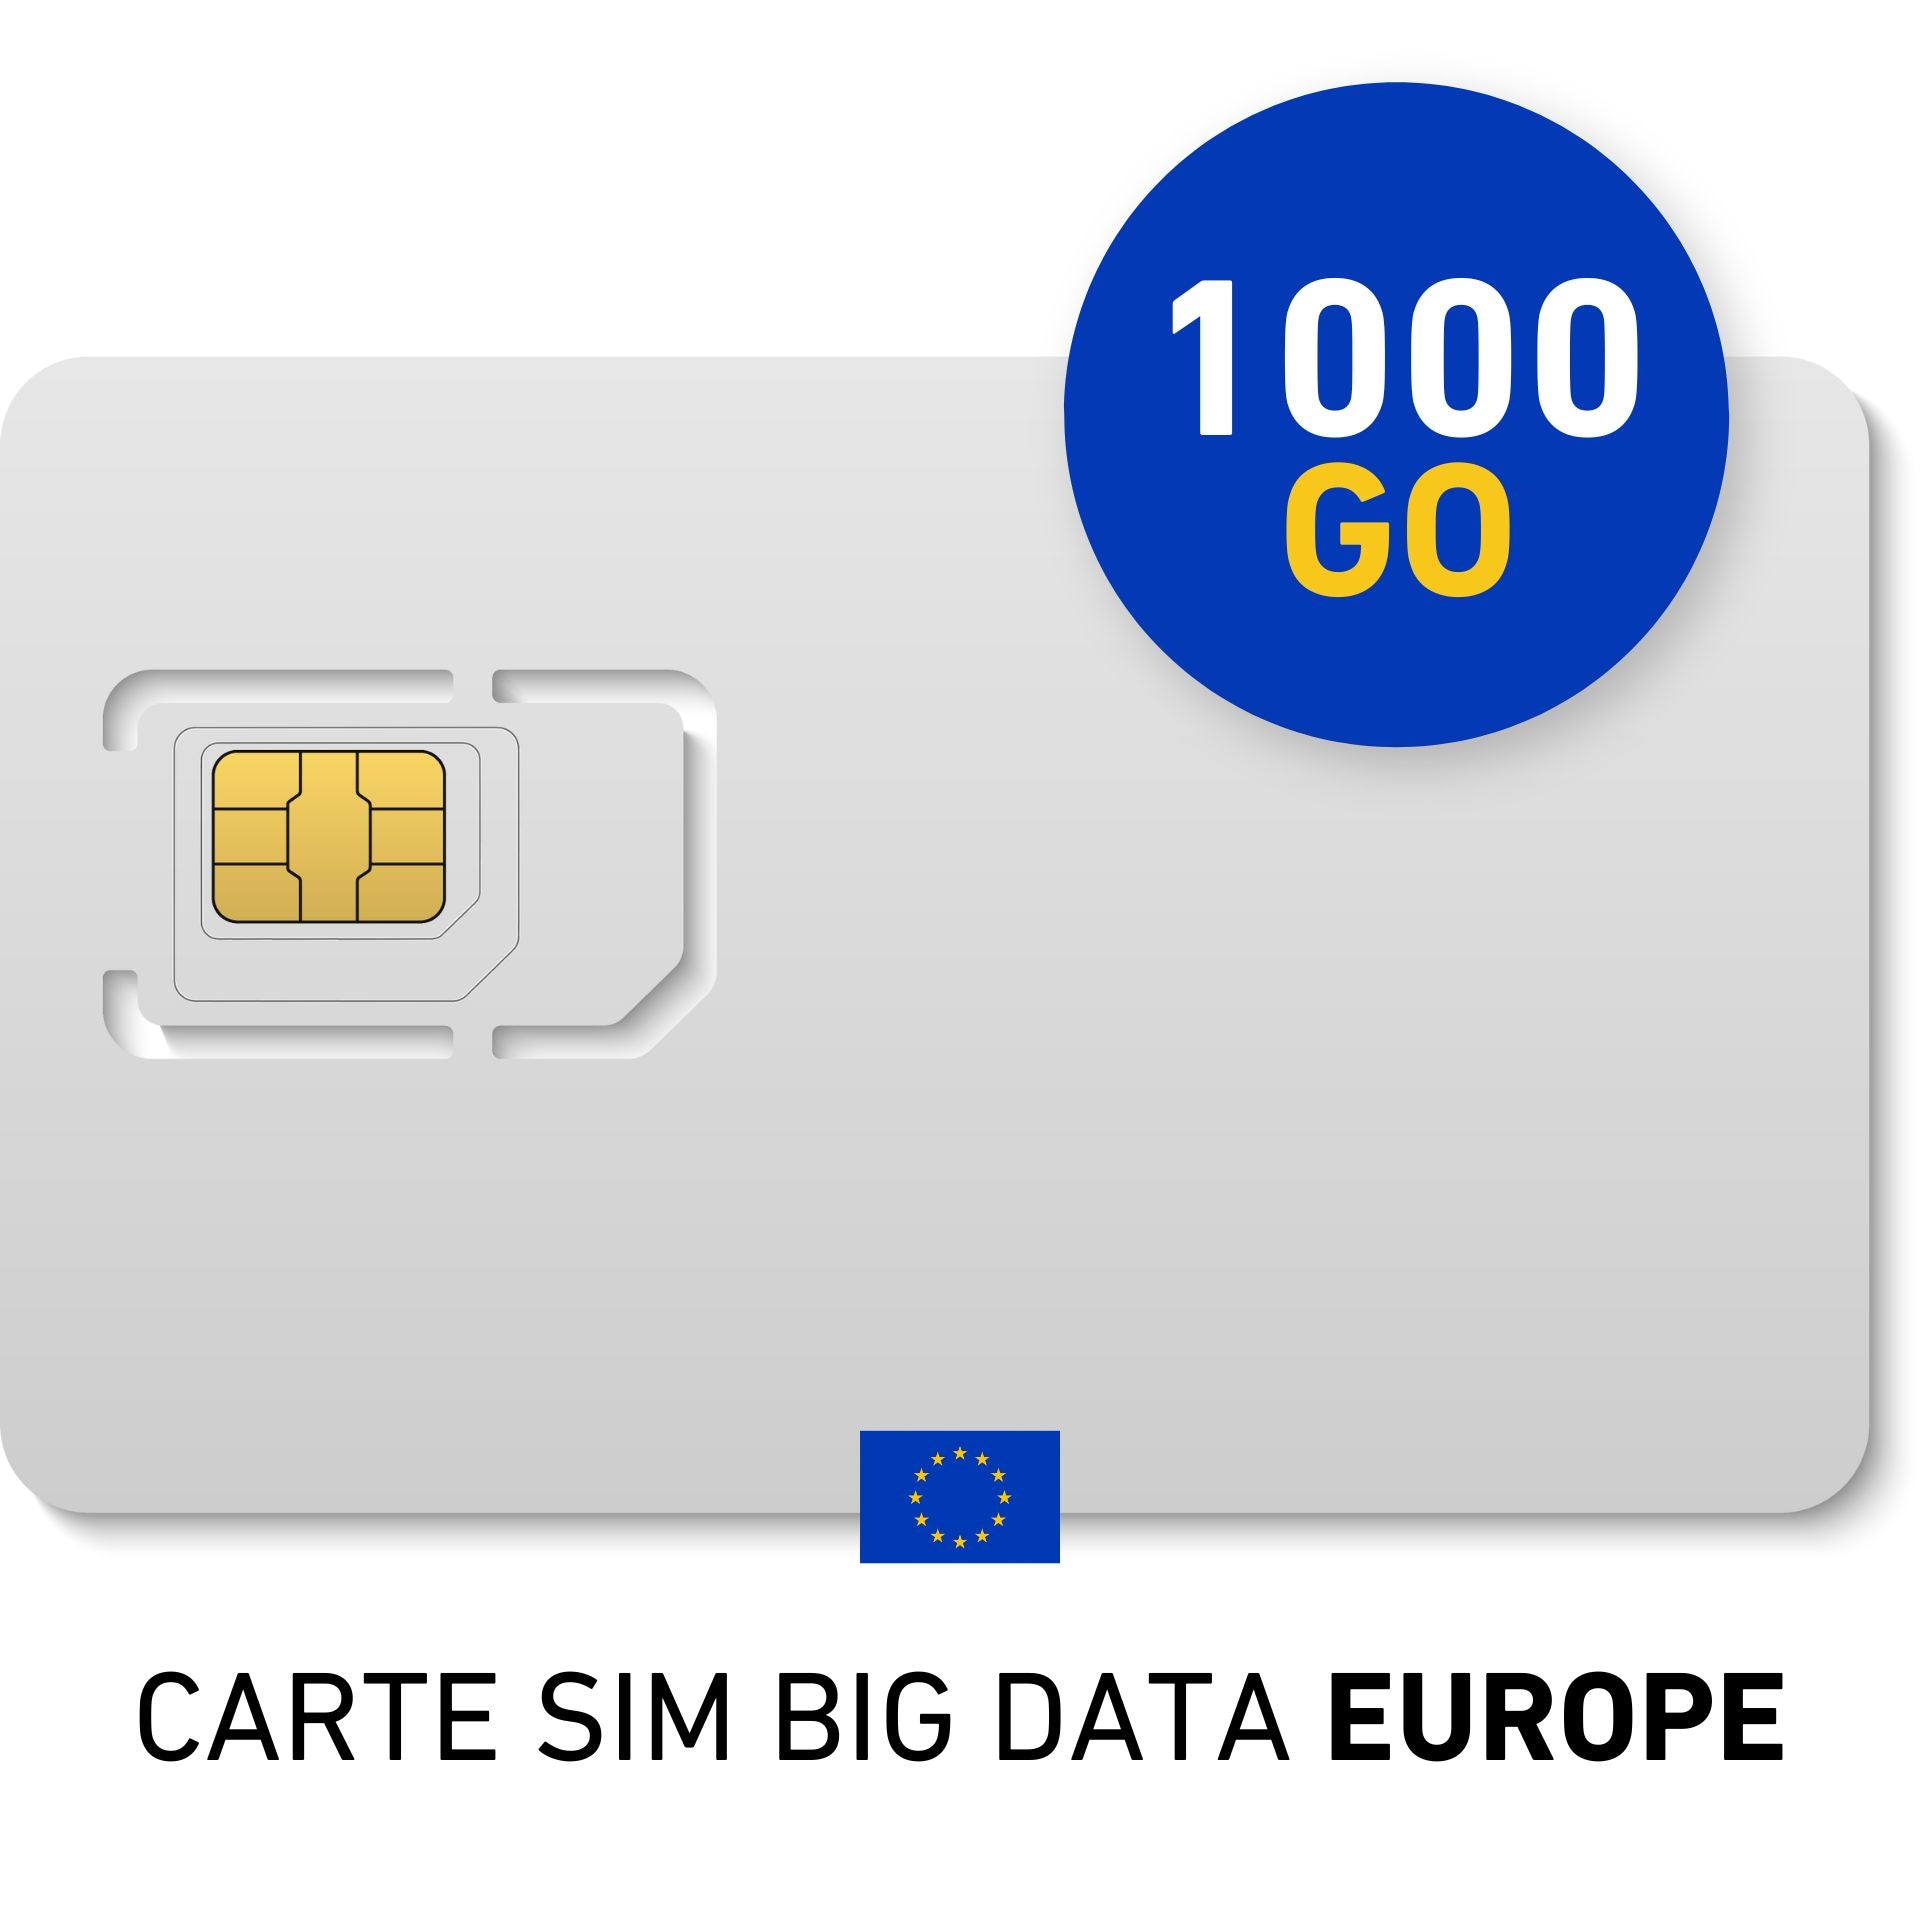 Abono mensual TARJETA SIM Grandes Datos Europa 1000Go